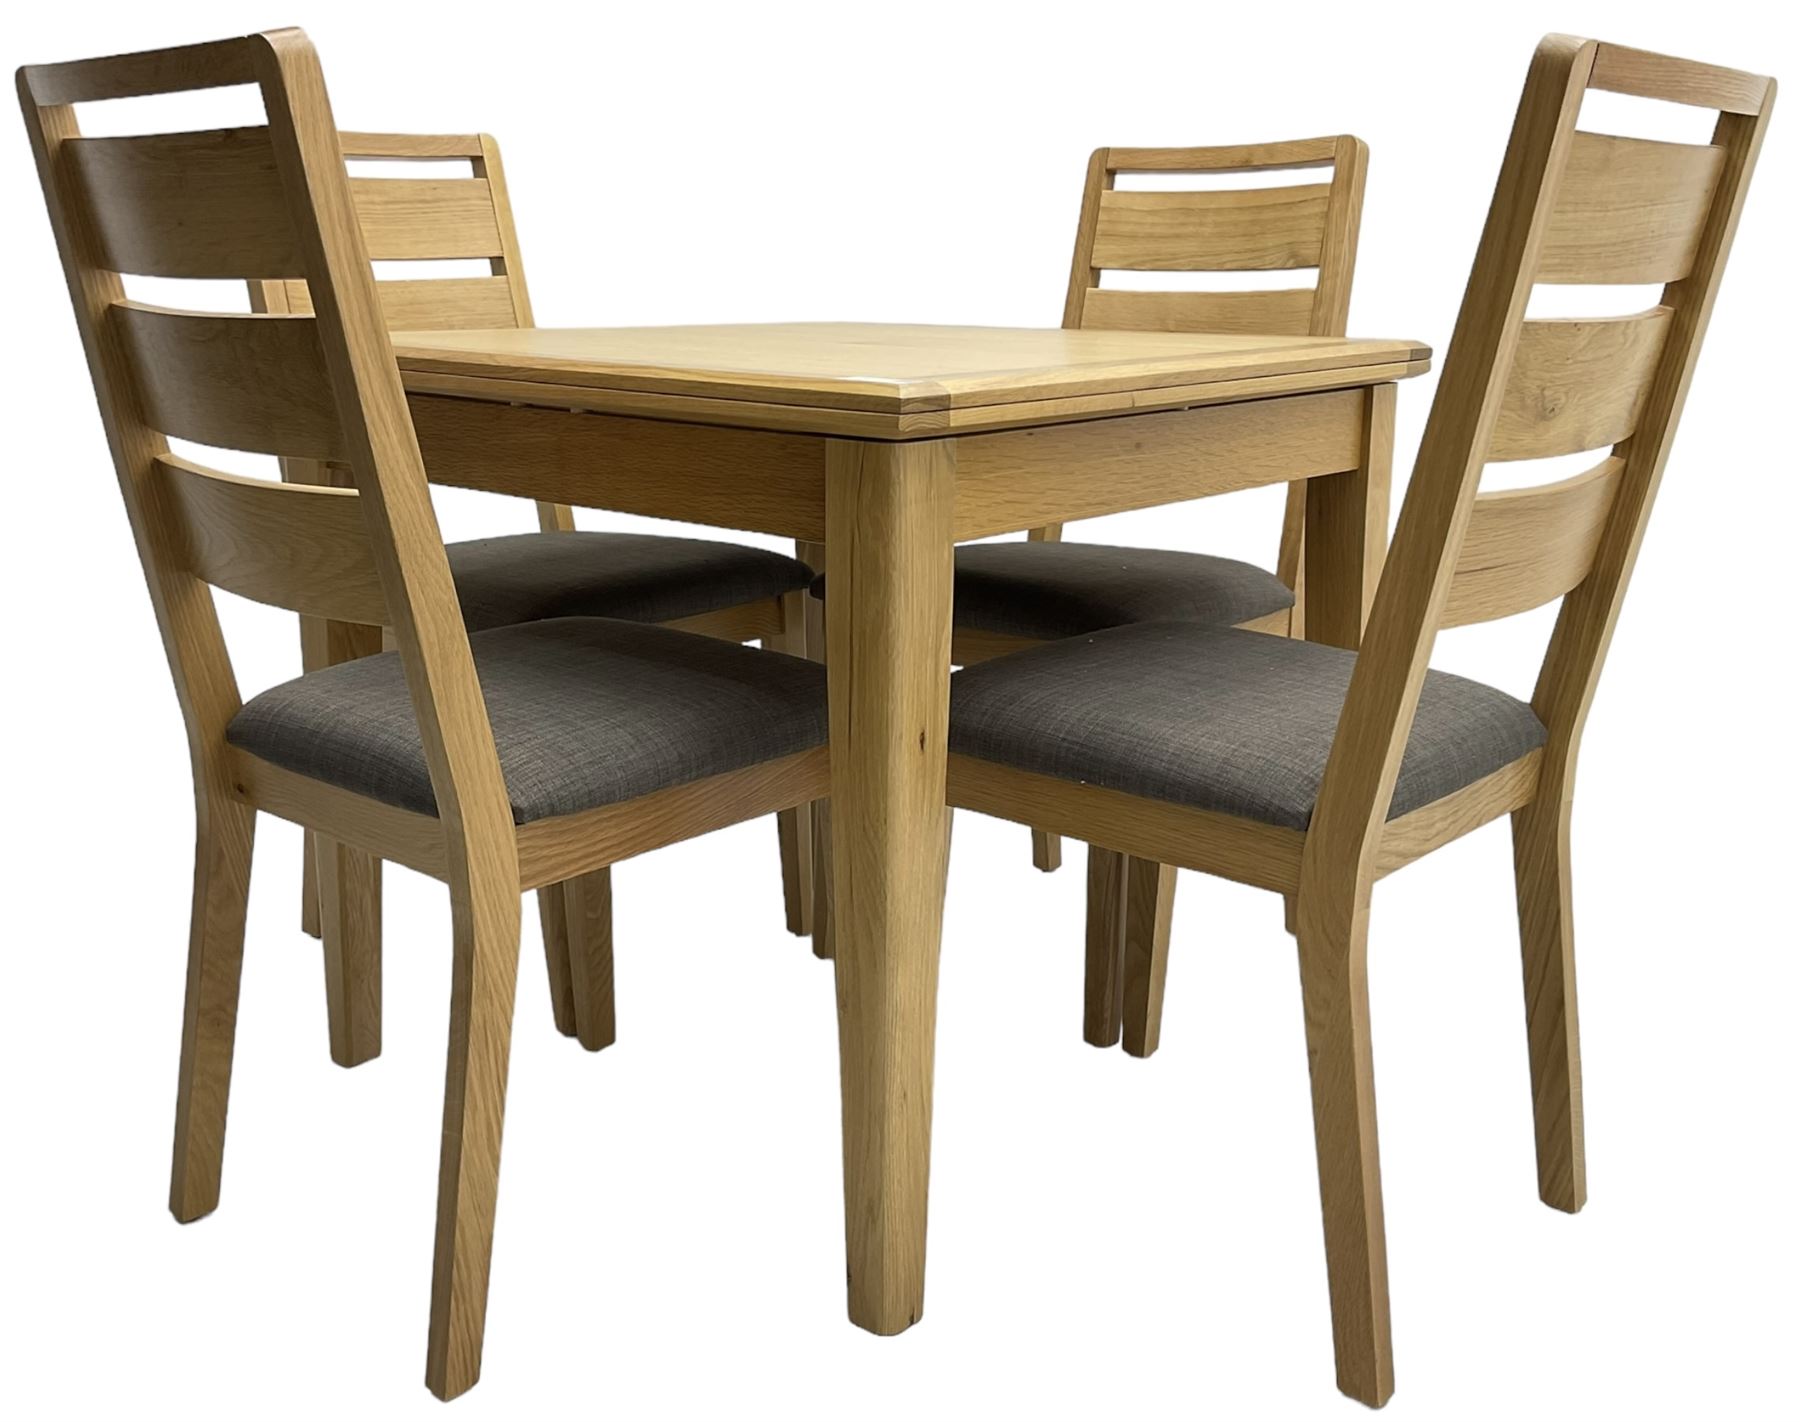 Light oak extending dining table - Image 4 of 6